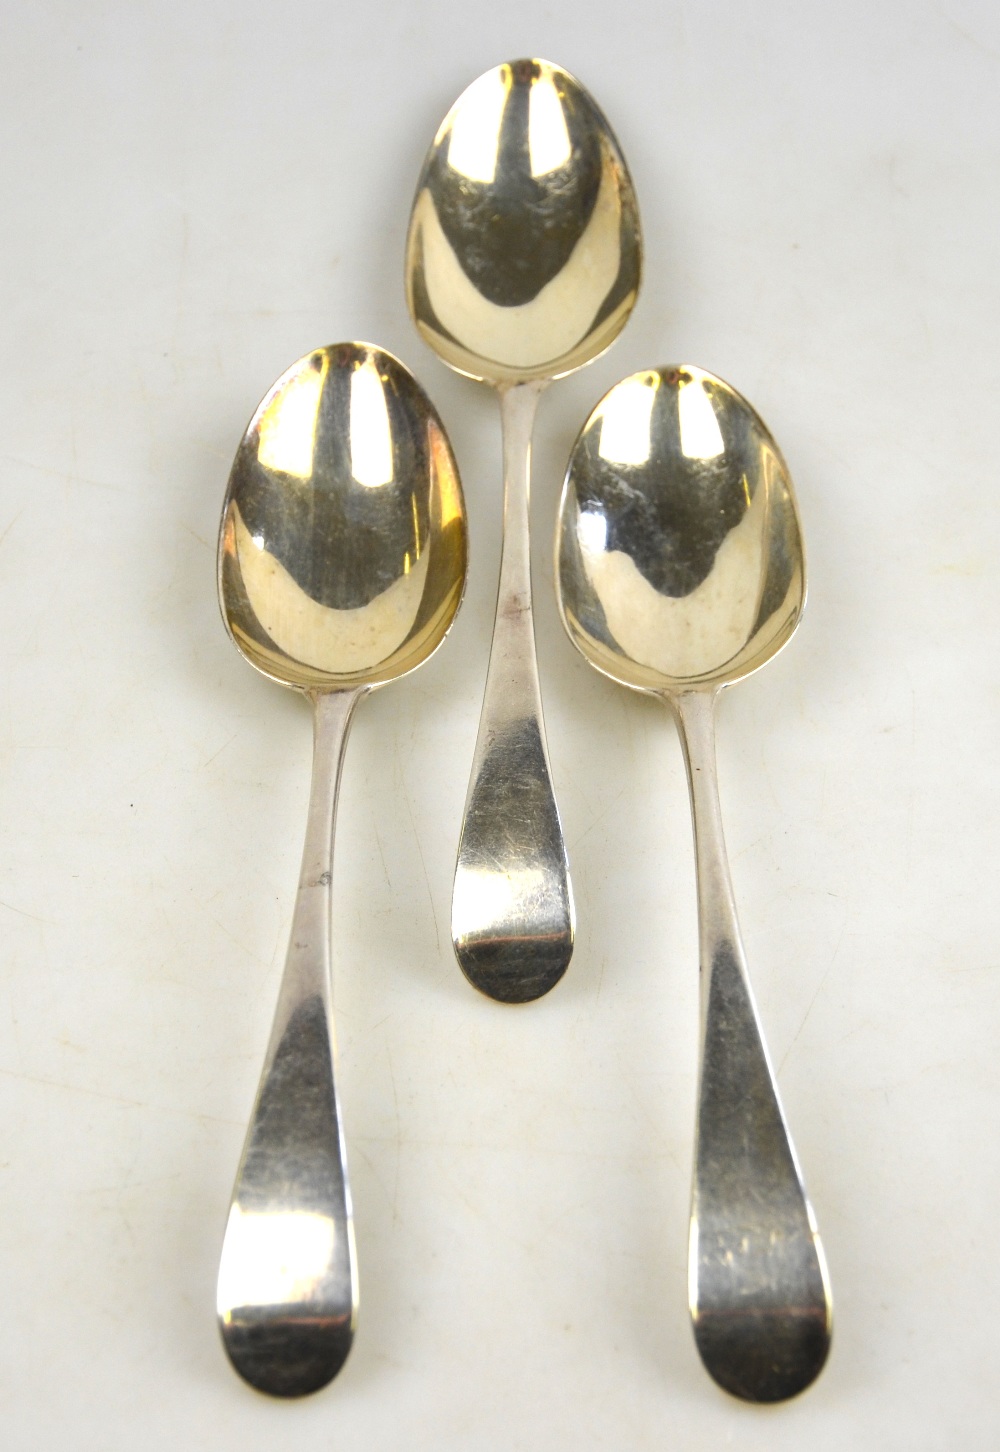 Three George III silver OEP table spoons, John McFerlan, London 1784 (incuse duty mark), 5.9 oz (